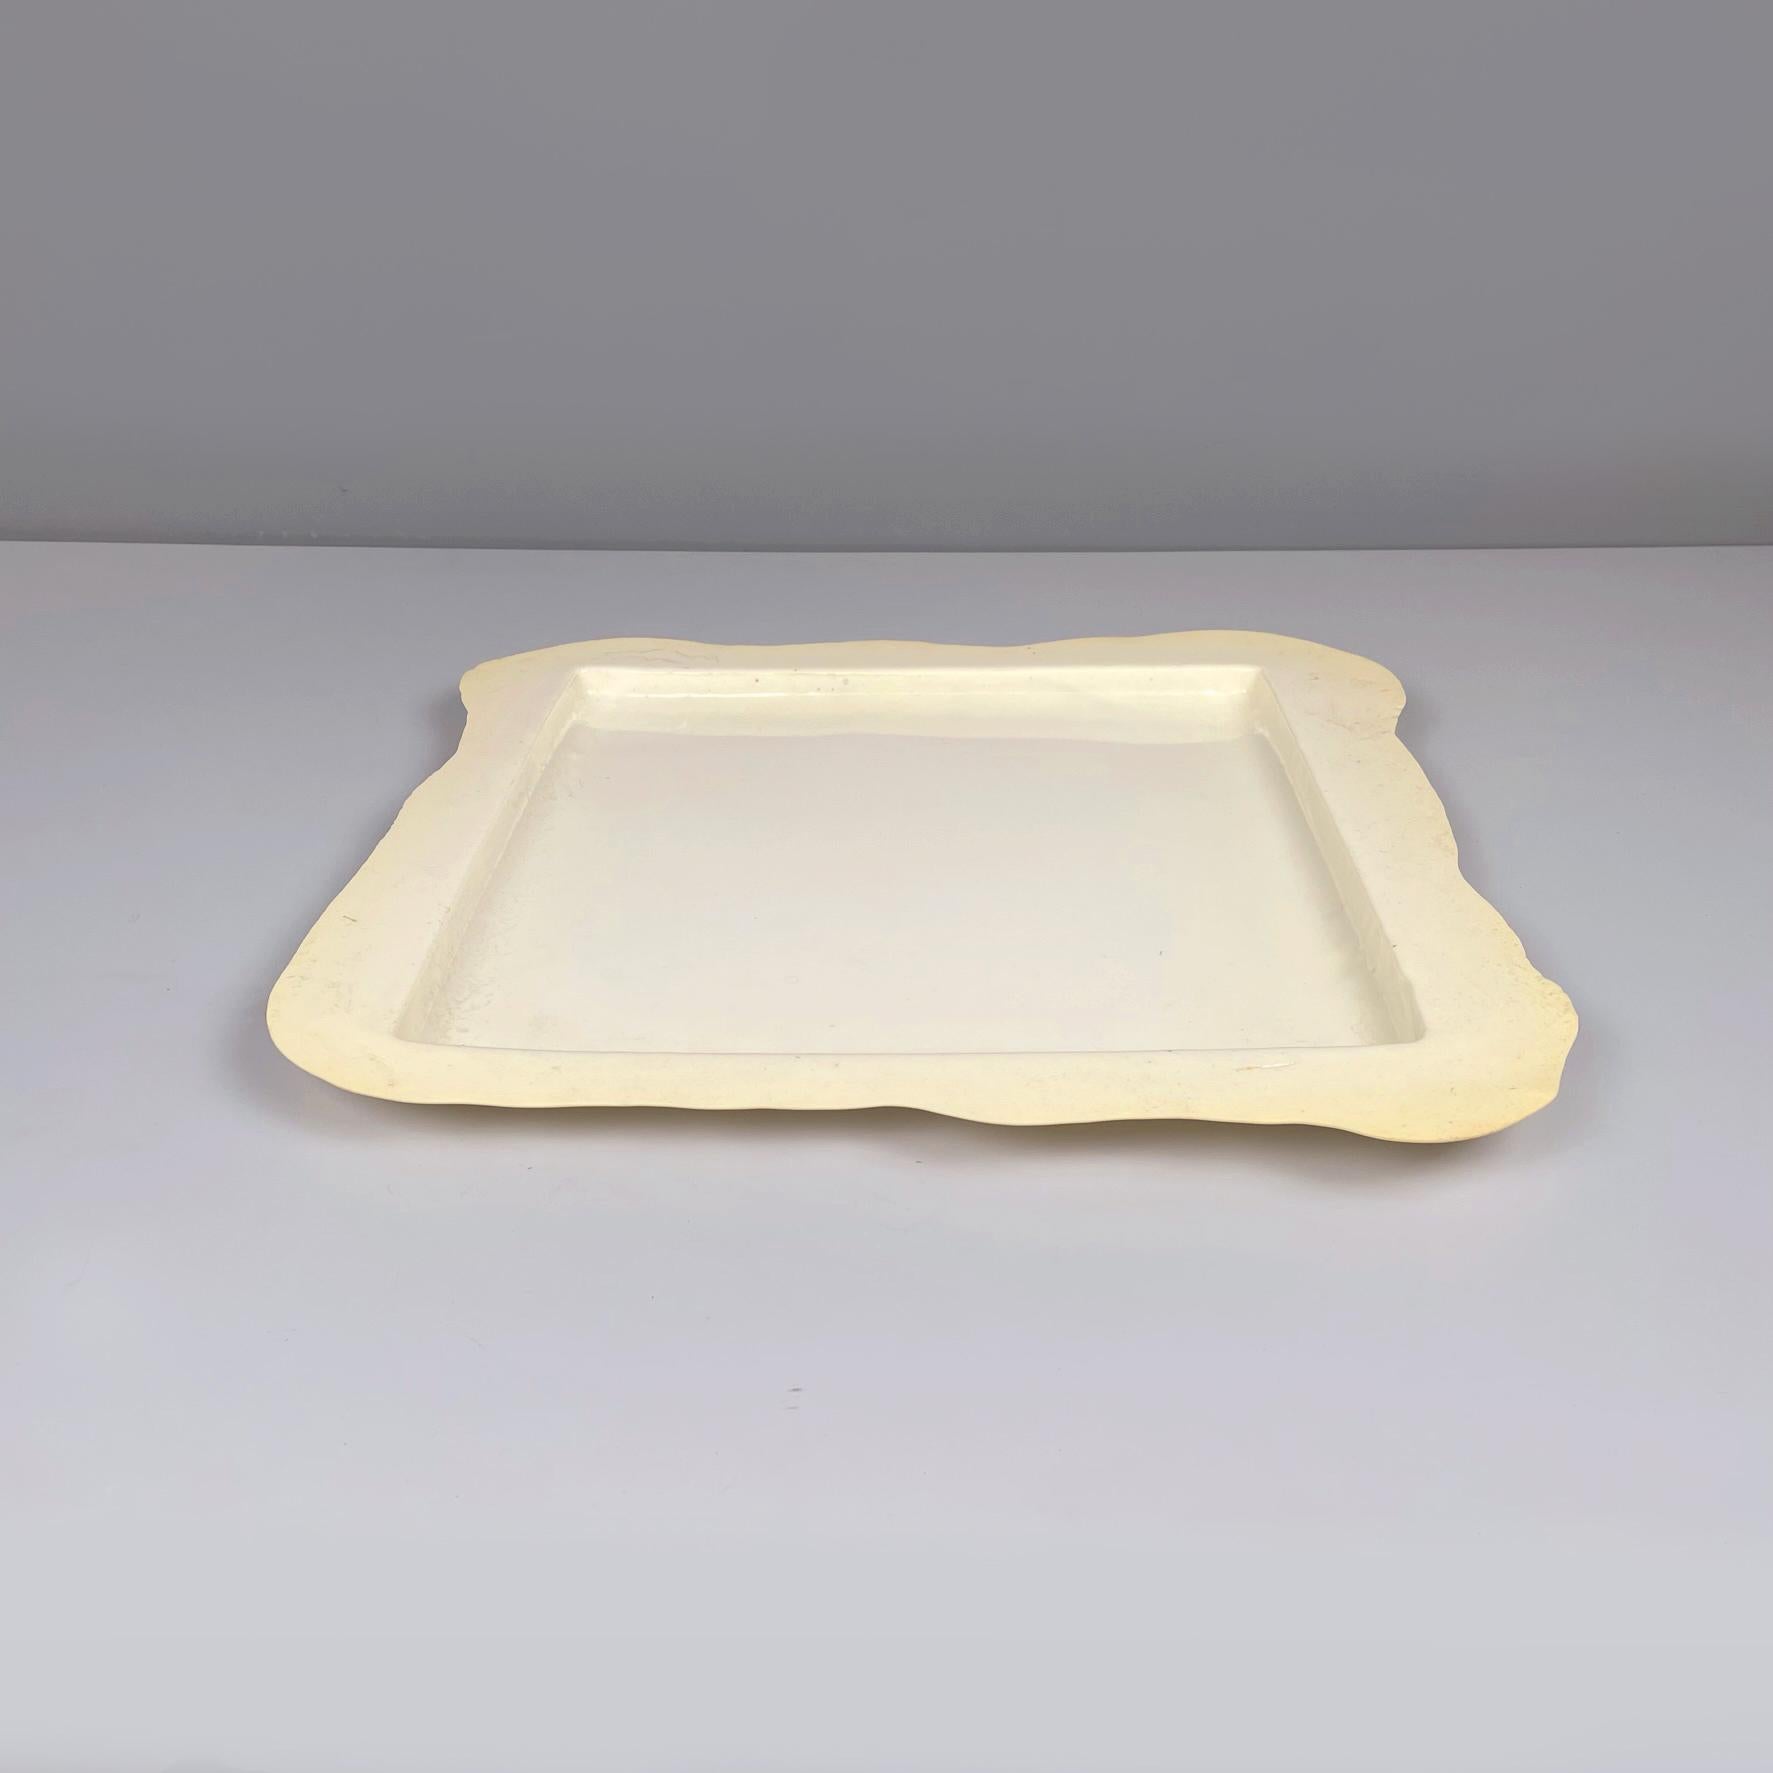 Post-Modern Italian post-modern White Resin try-tray by Gaetano Pesce for Fish Design, 2000s For Sale